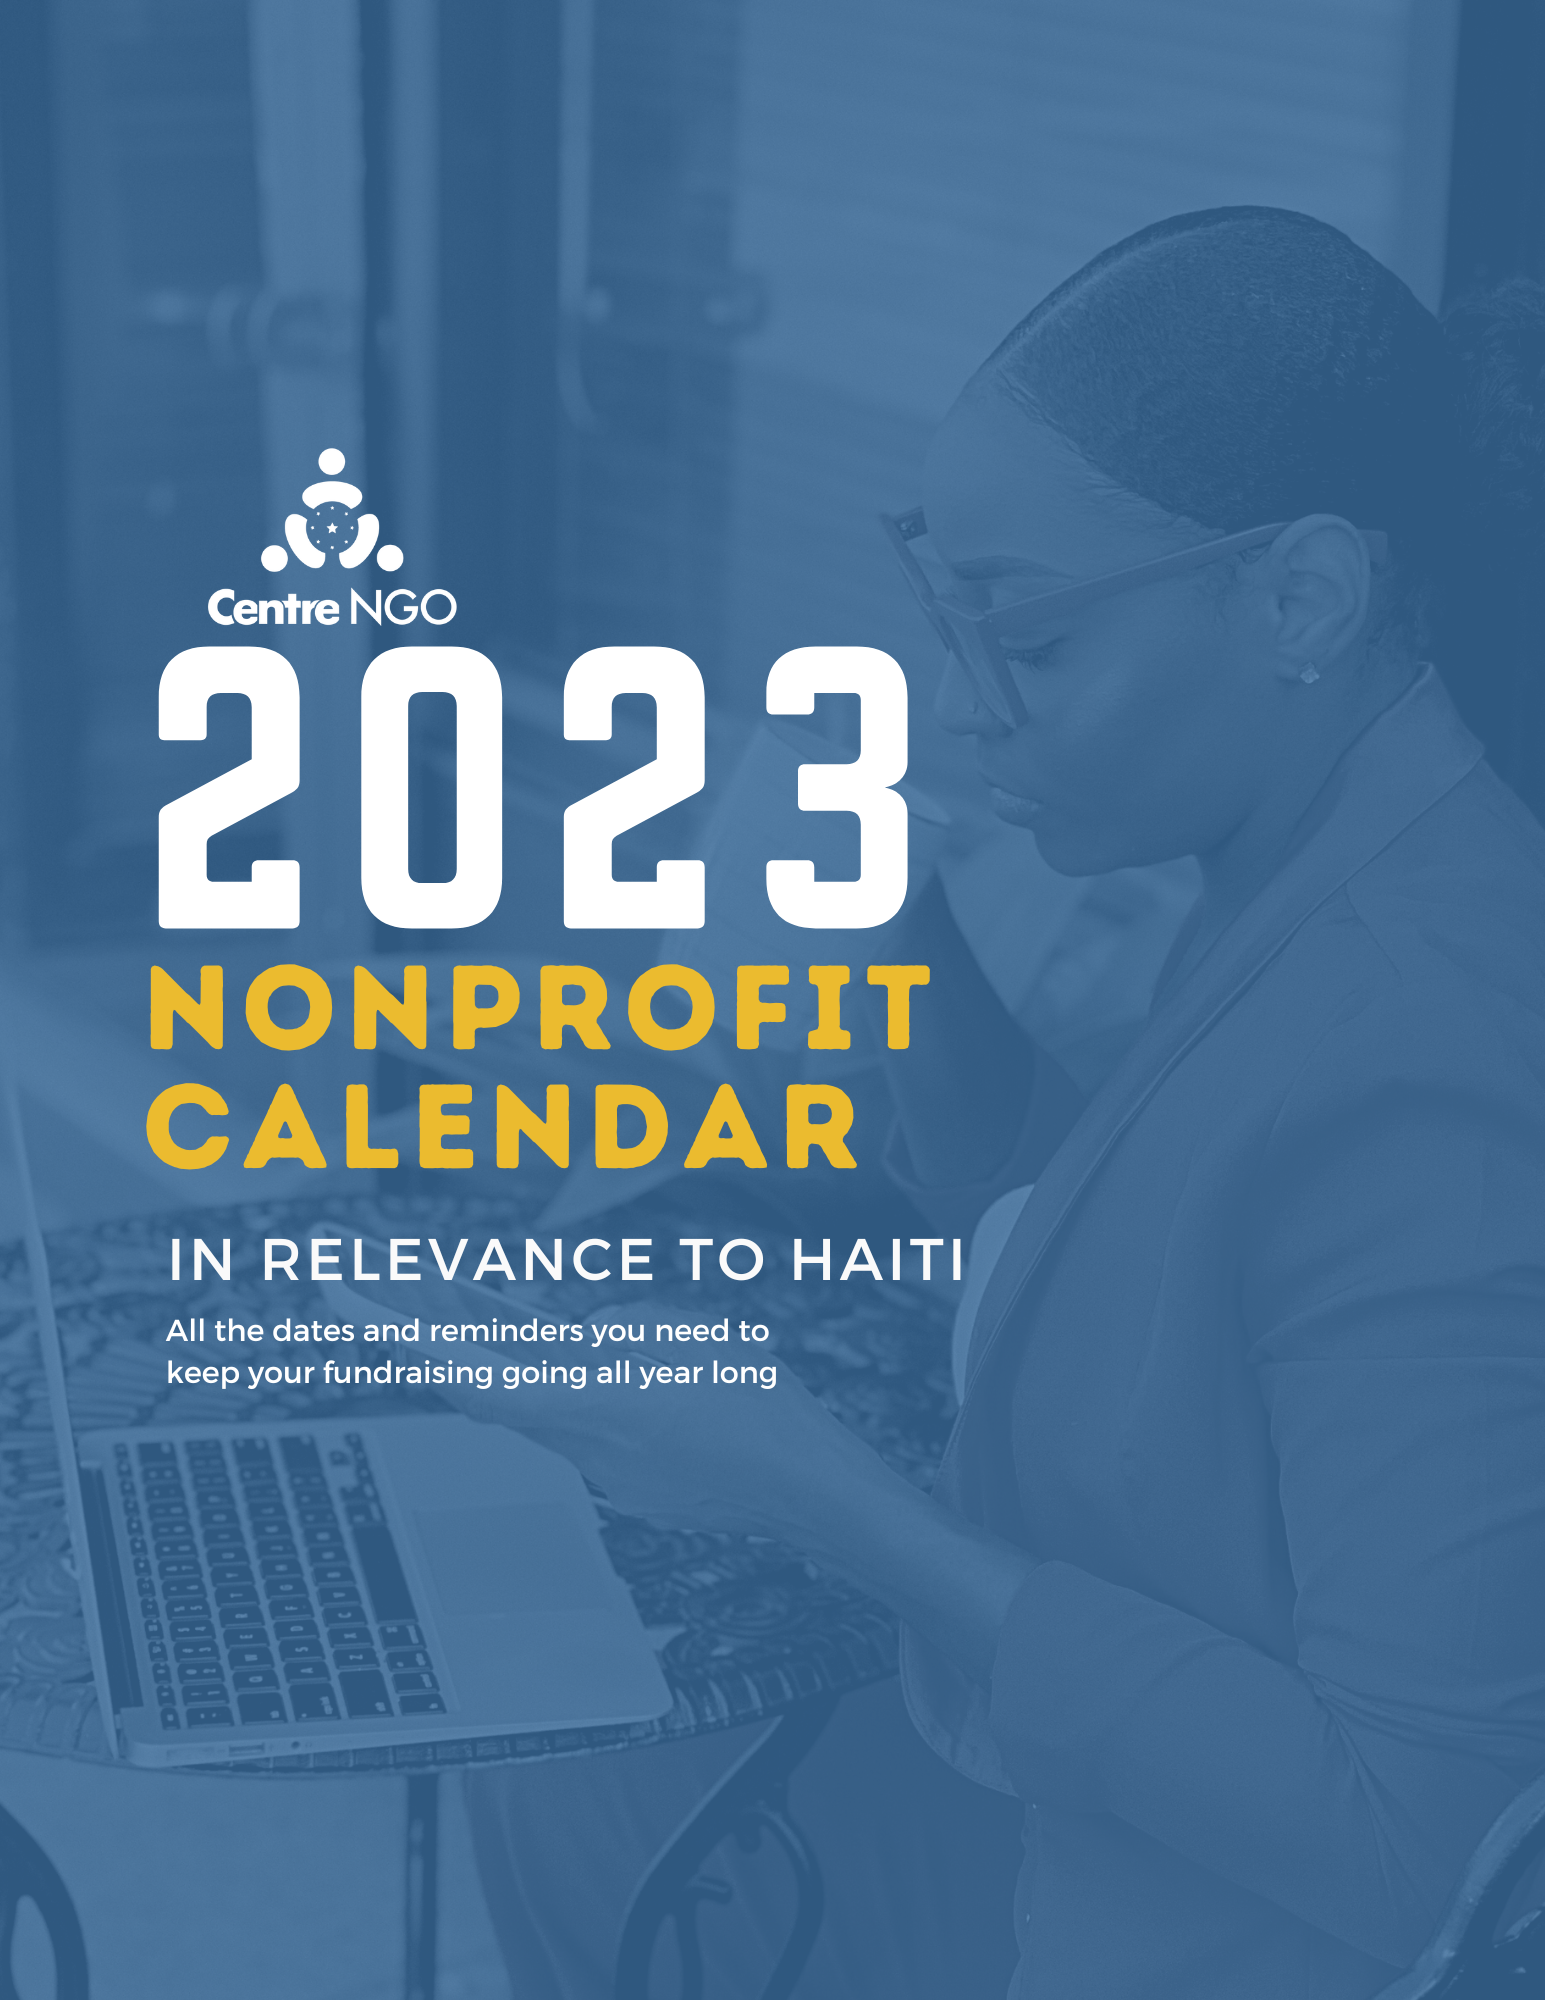 The 2023 Nonprofit Calendar